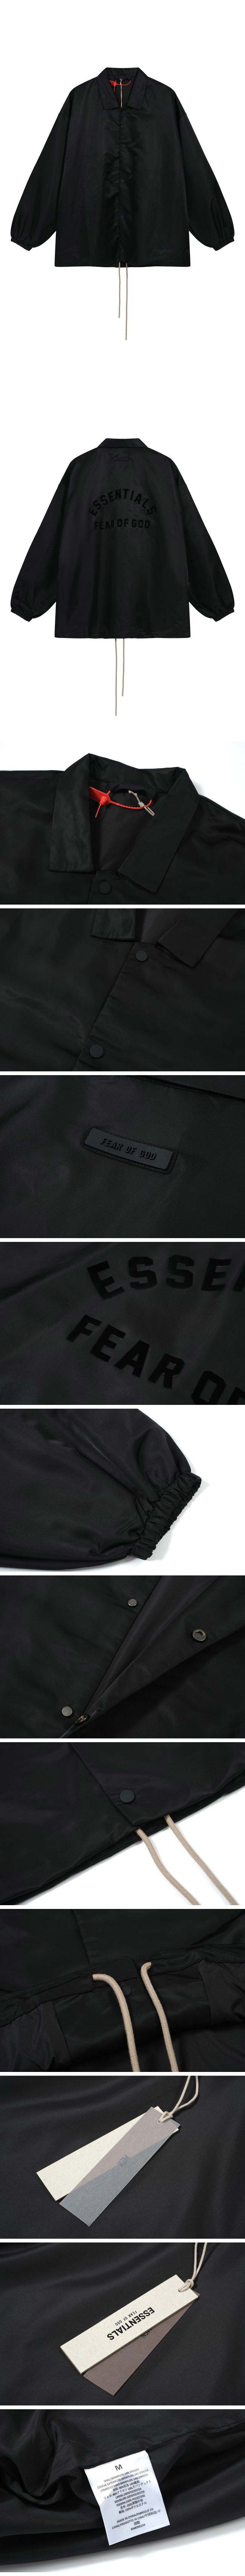 Fear of God Essentials Fog Jacket フィアオブゴッド エッセンシャルズ Fog ジャケット